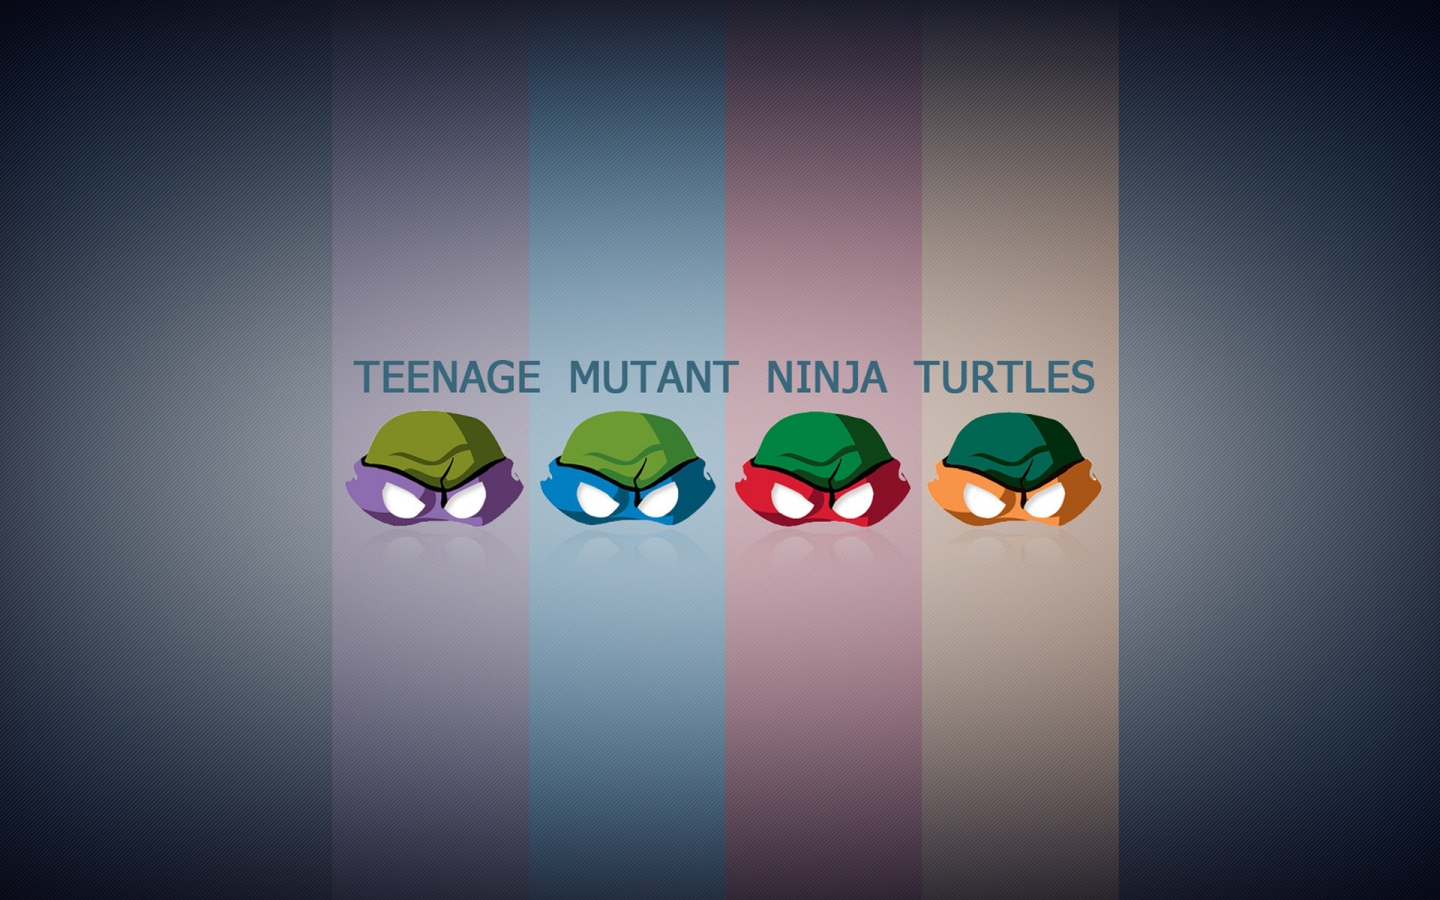 Teengae Mutant Ninja Turtles for 1440 x 900 widescreen resolution